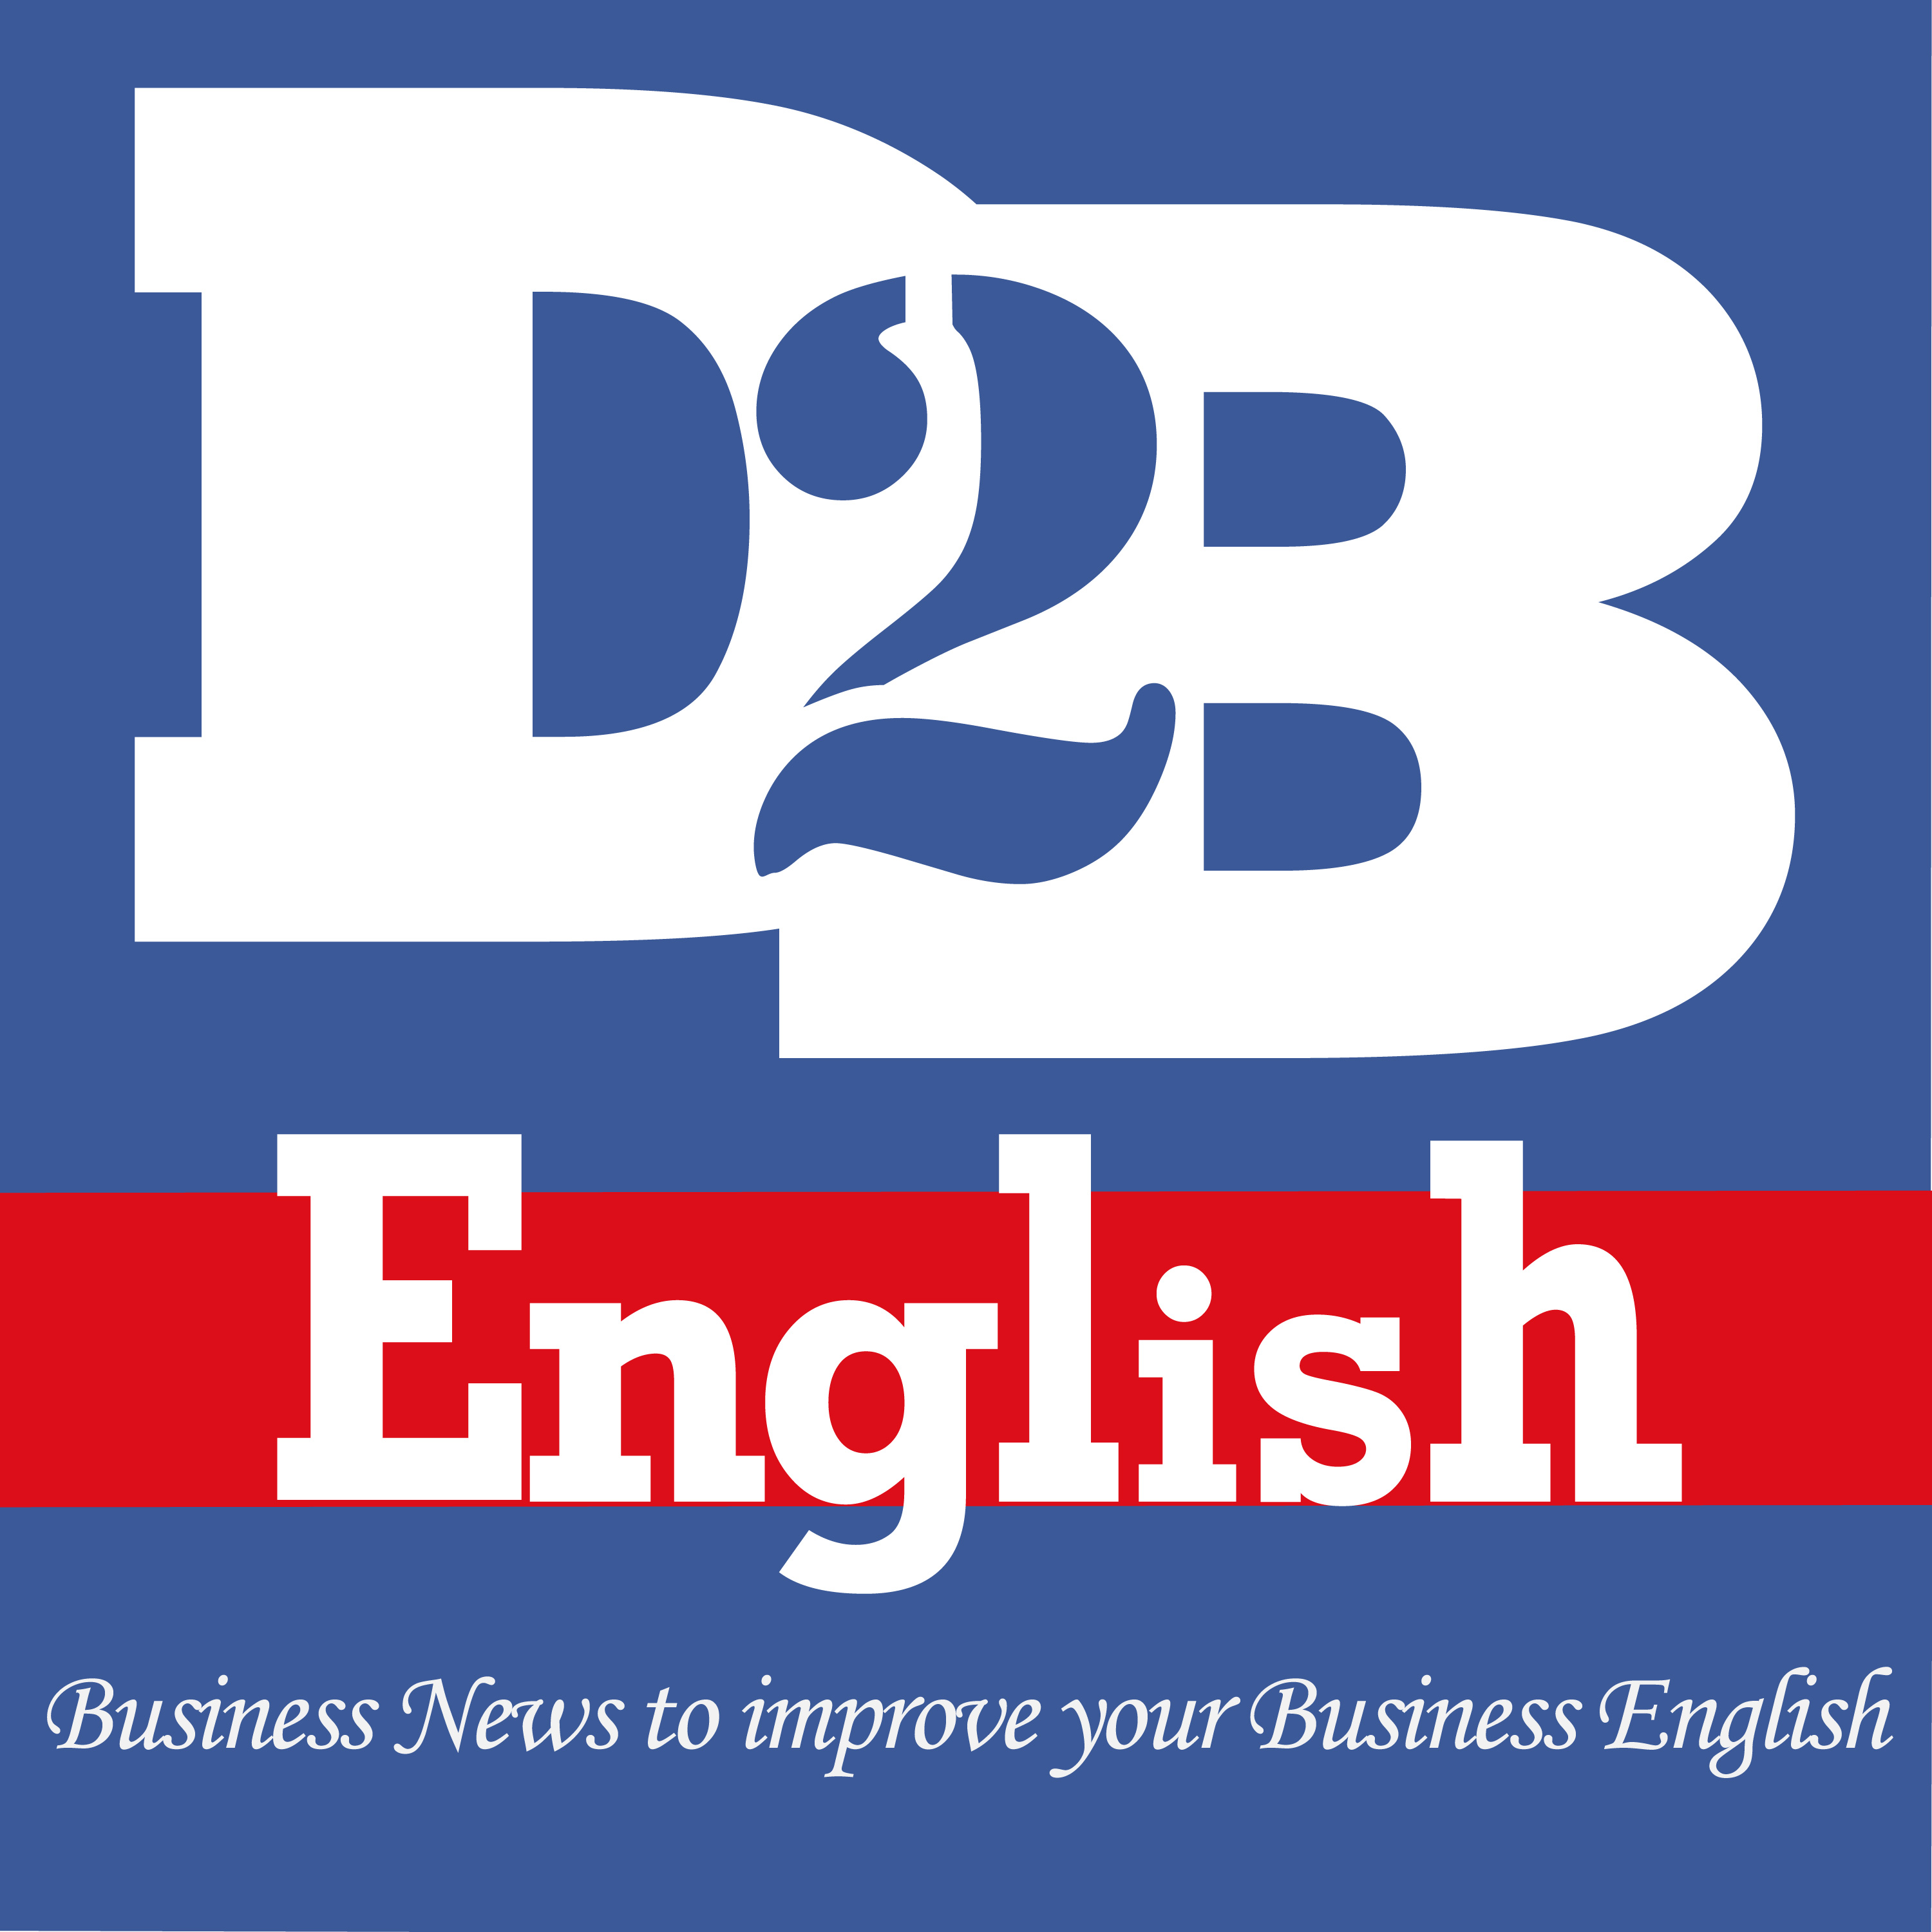 http://downtobusinessenglish.com/images/D2B-logo-2017.jpg